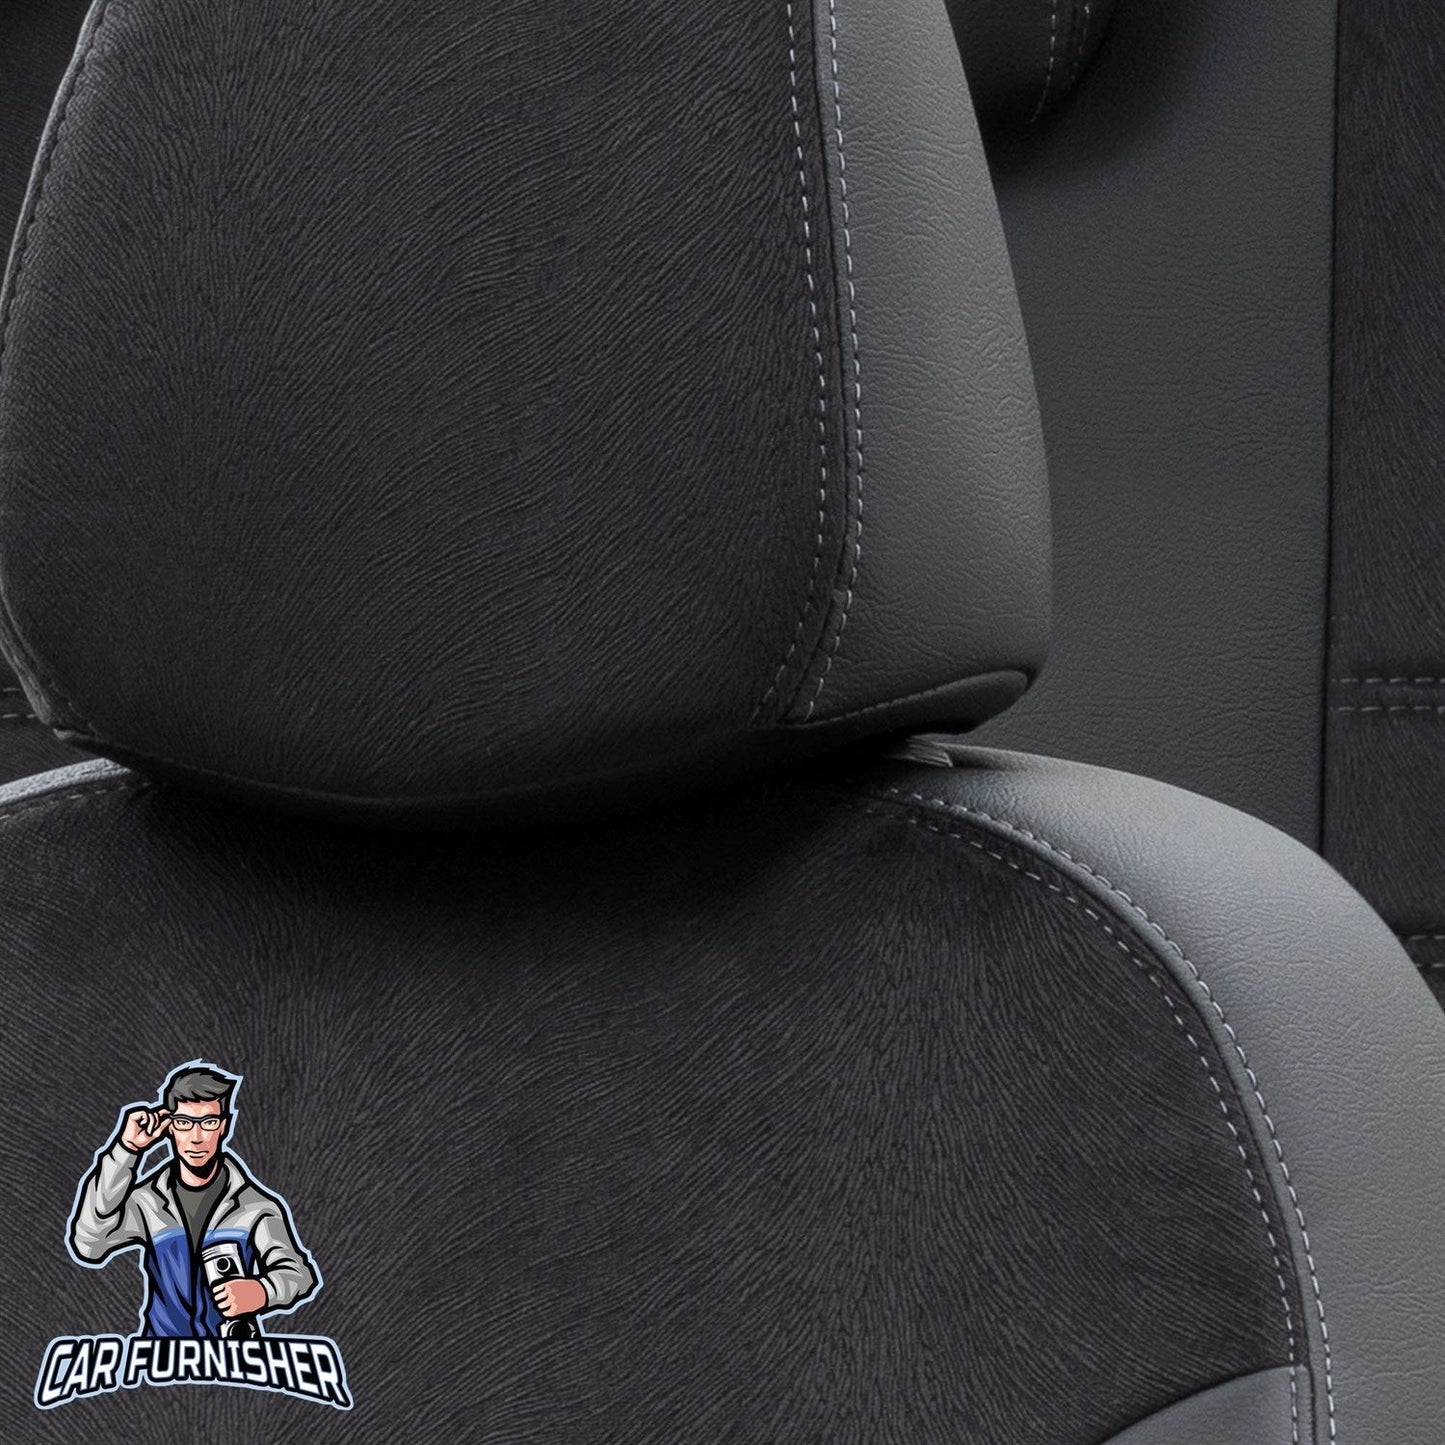 Suzuki Vitara Seat Covers London Foal Feather Design Black Leather & Foal Feather